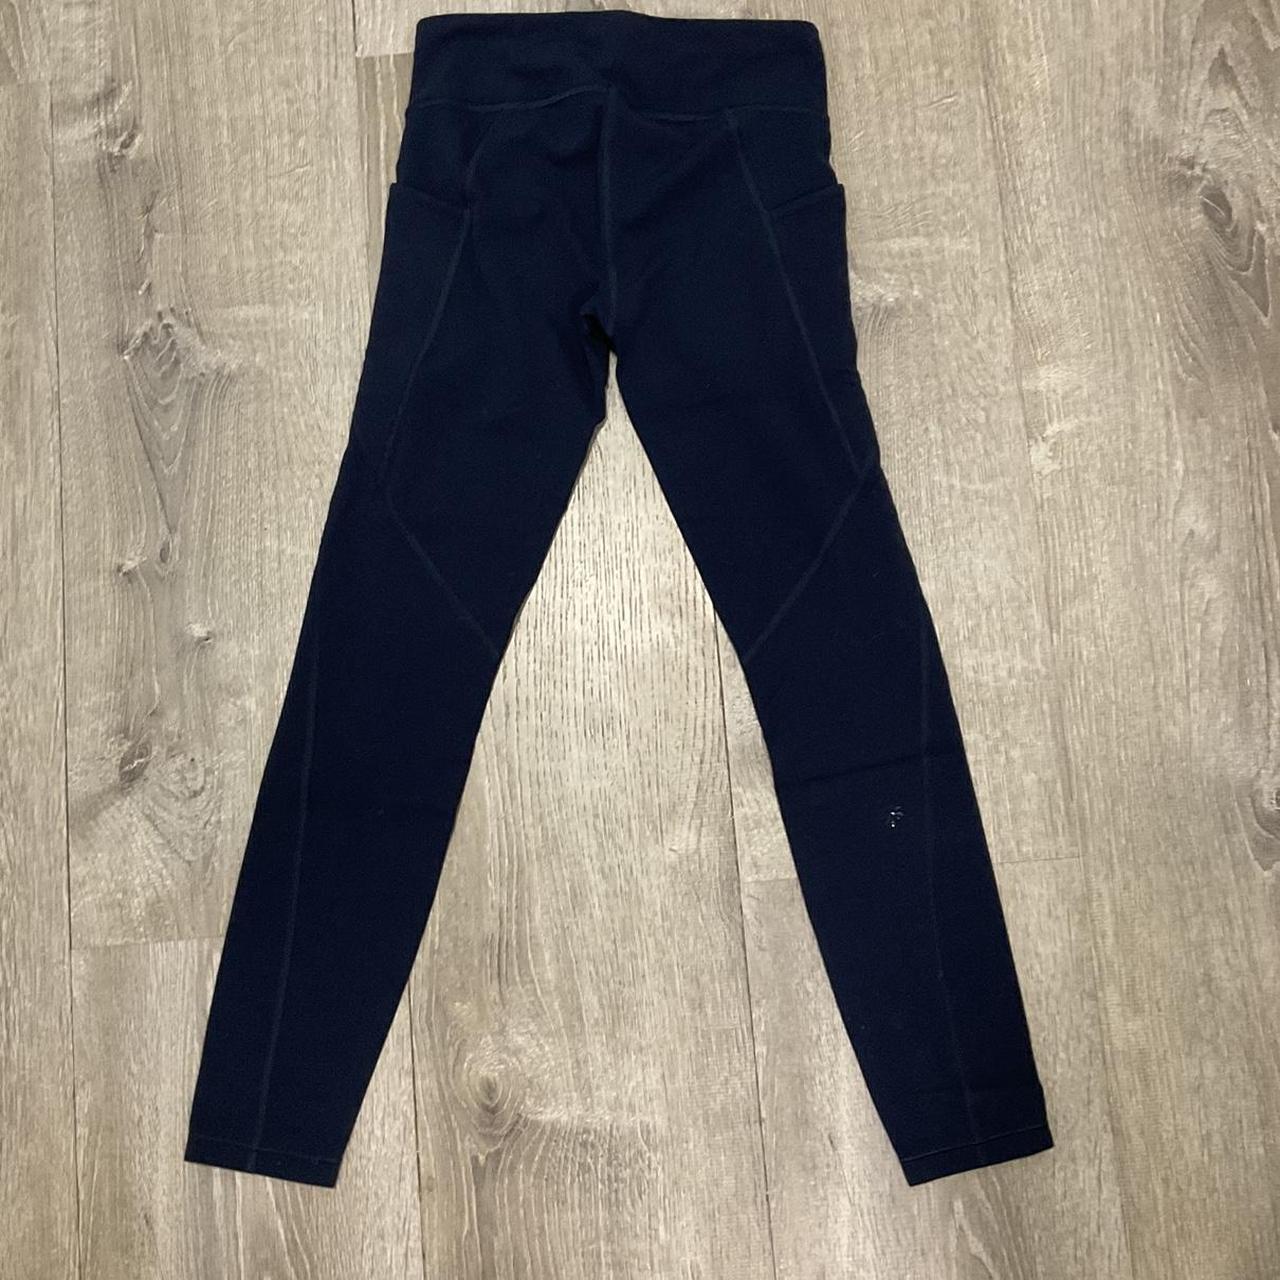 ATHLETA navy blue leggings with pockets on the - Depop